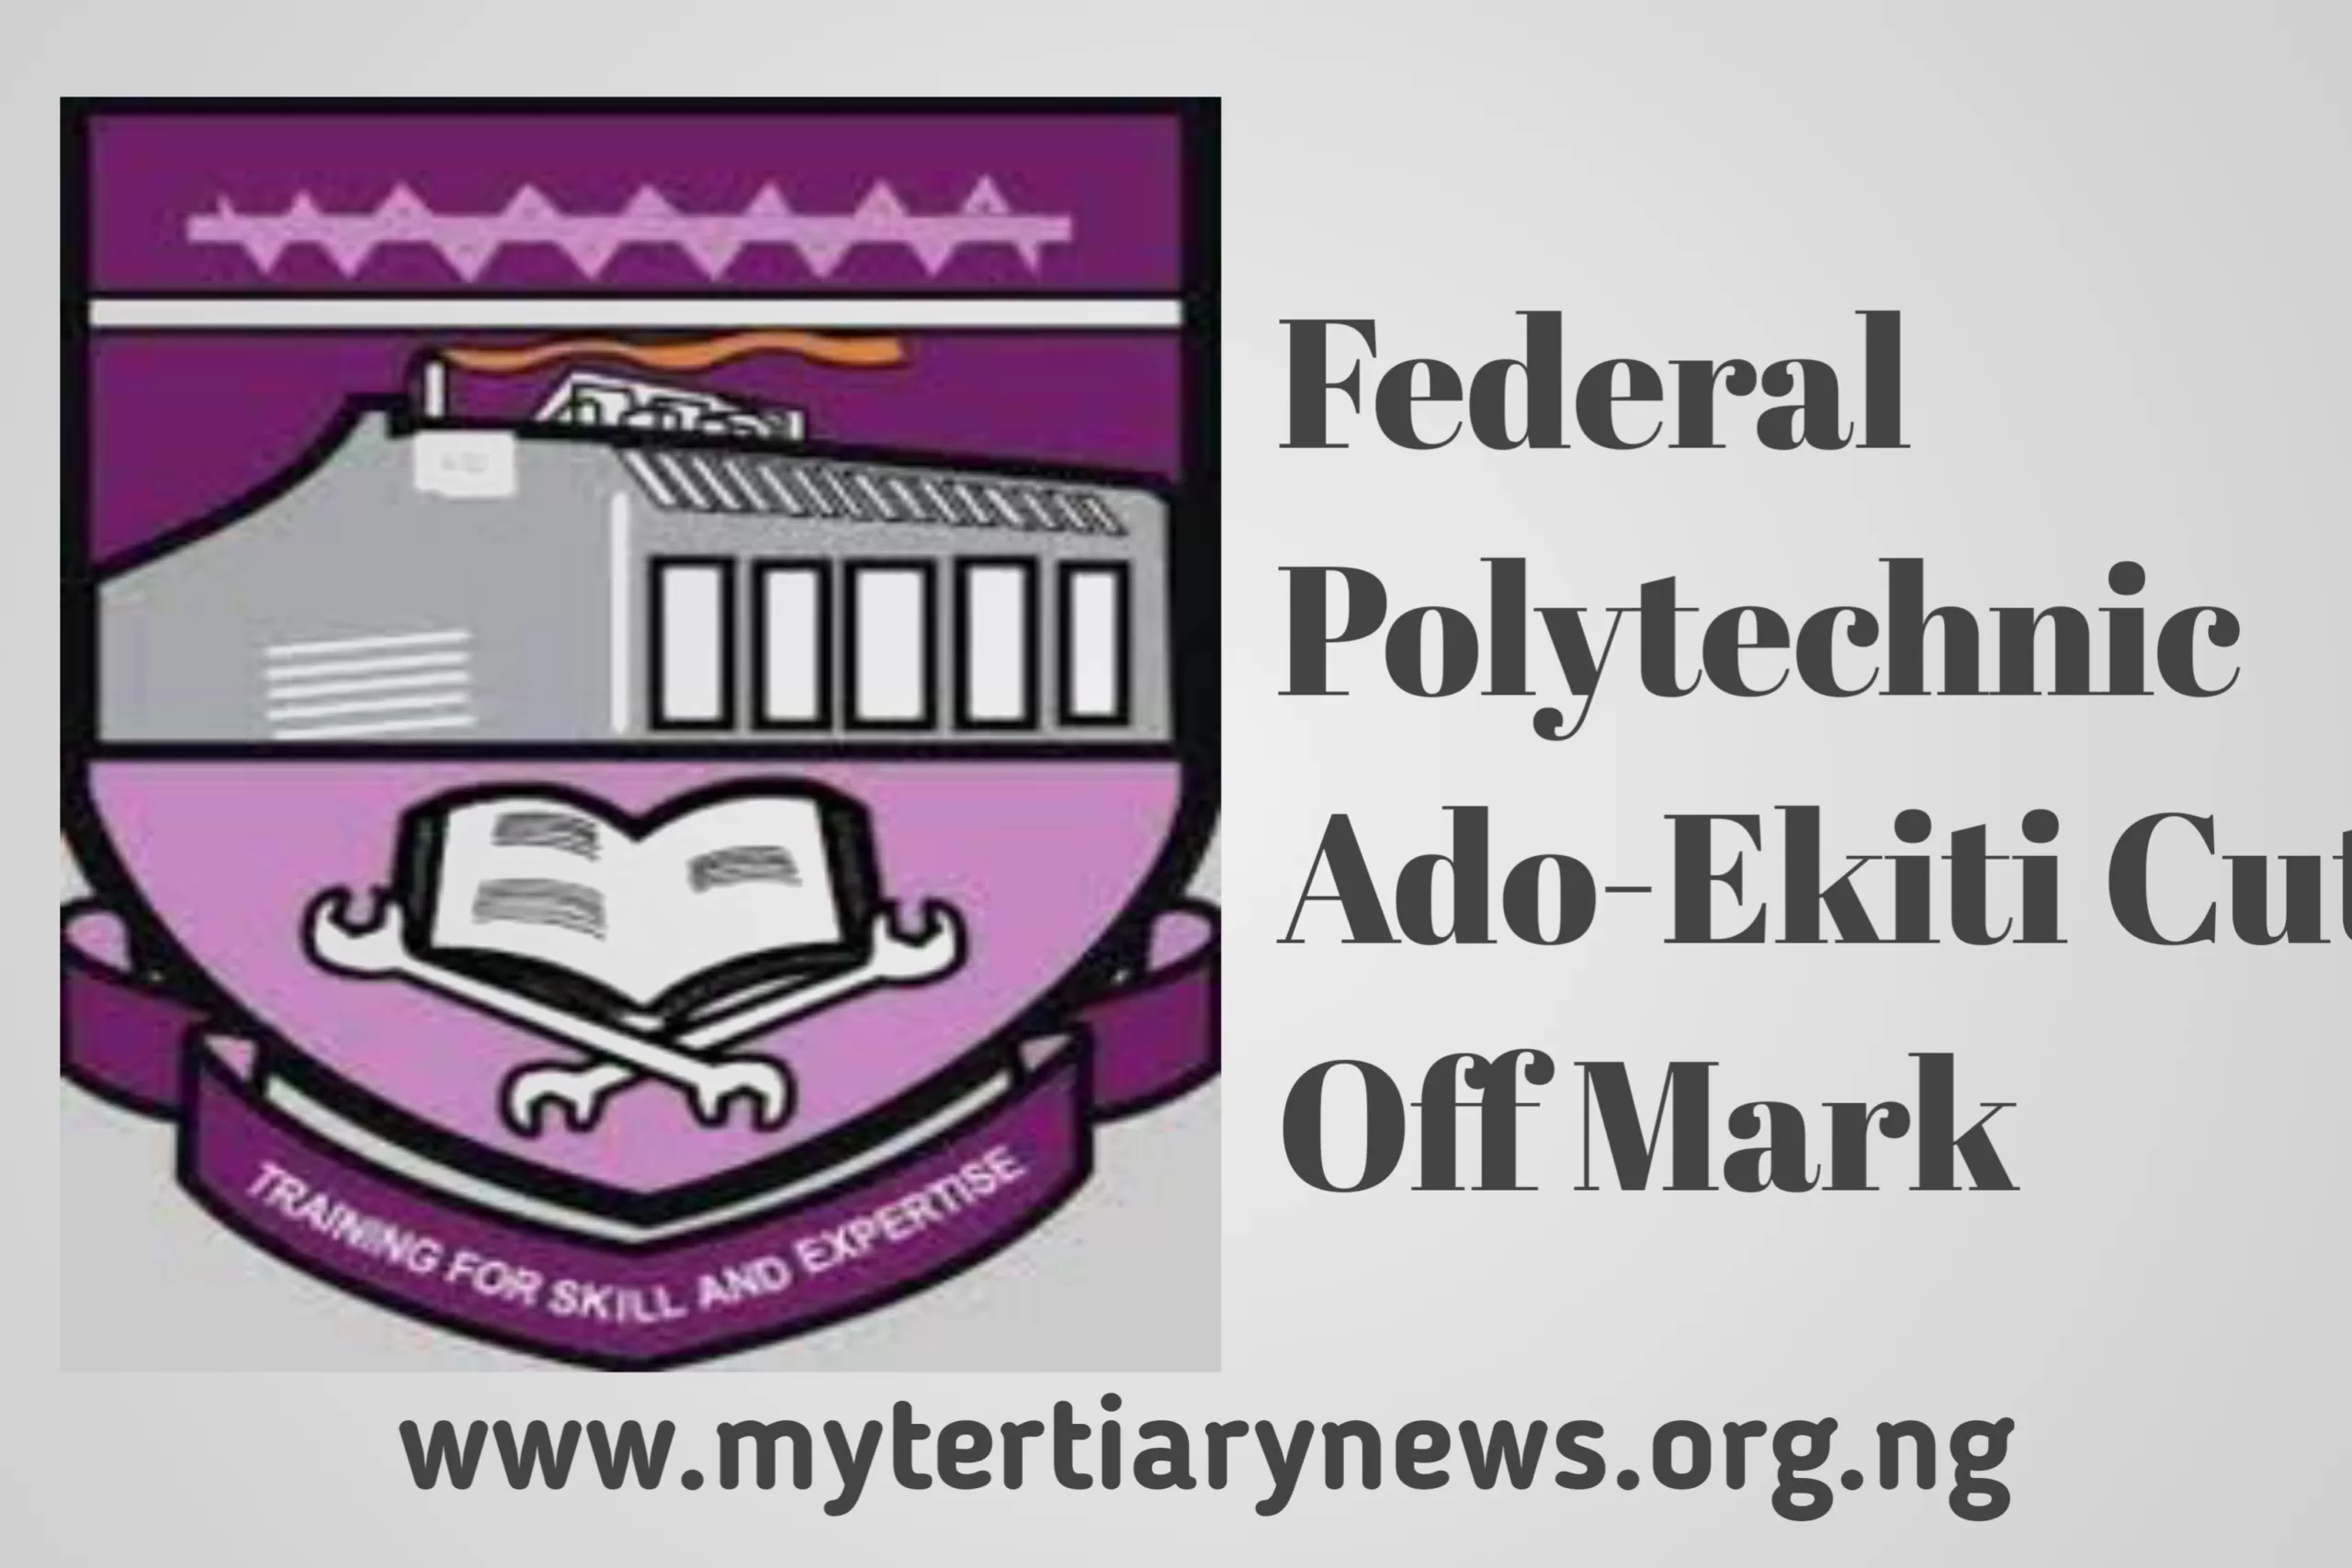 Federal Polytechnic Ado-Ekiti Image || Federal Polytechnic Ado-Ekiti Cut Off Mark